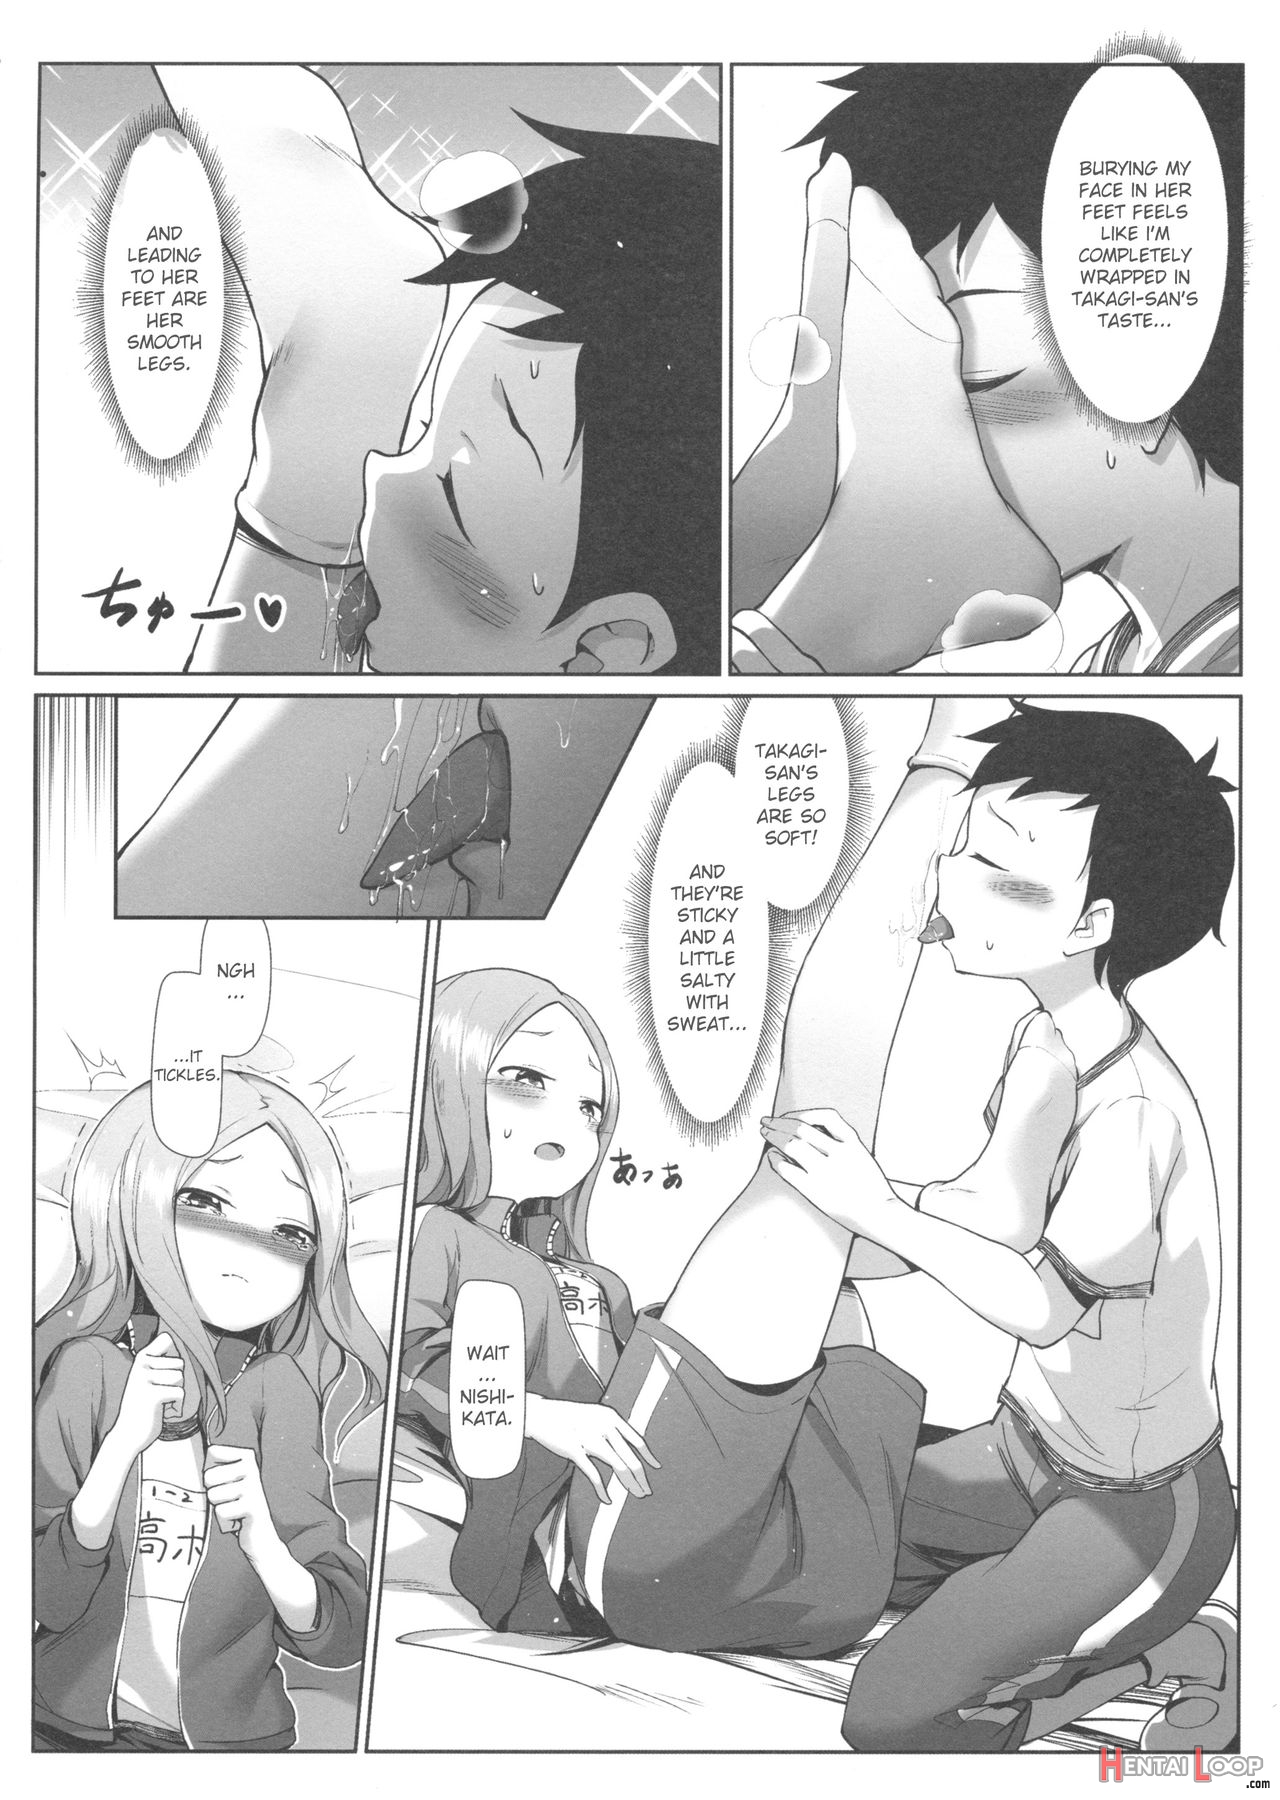 Mixed With Takagi-san's Sweat page 7